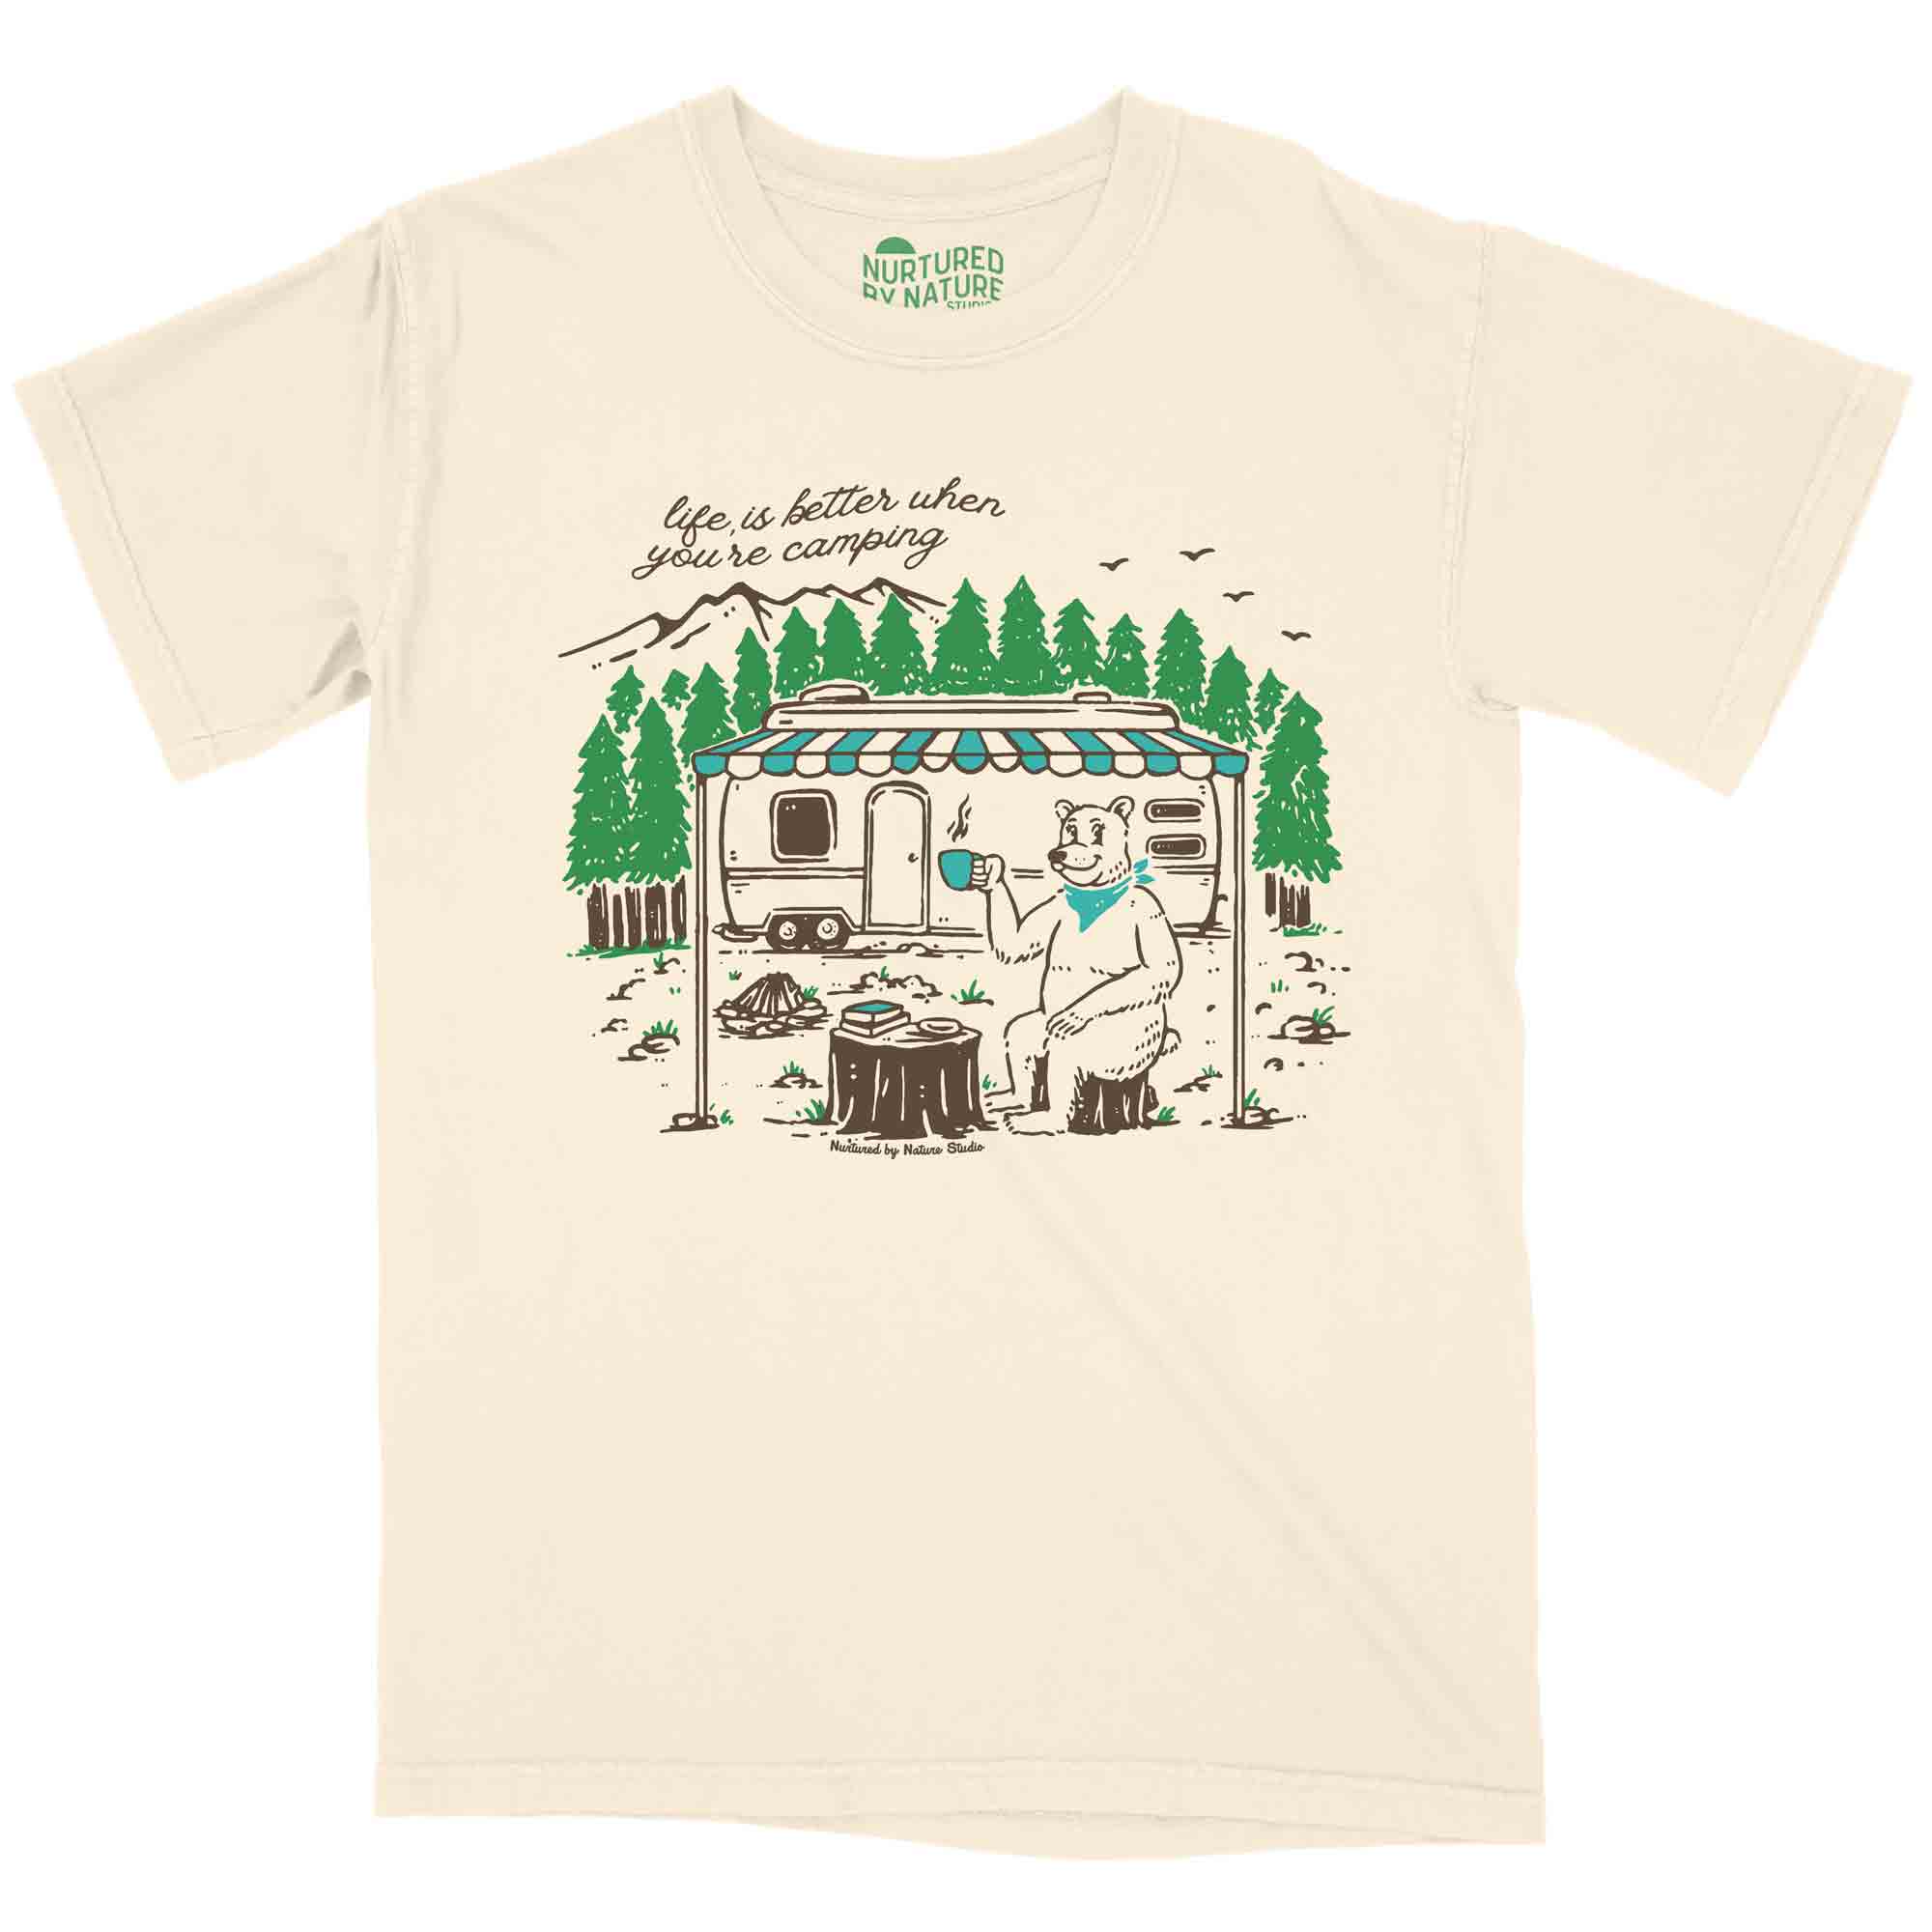 Glamping Bear Graphic T-Shirt